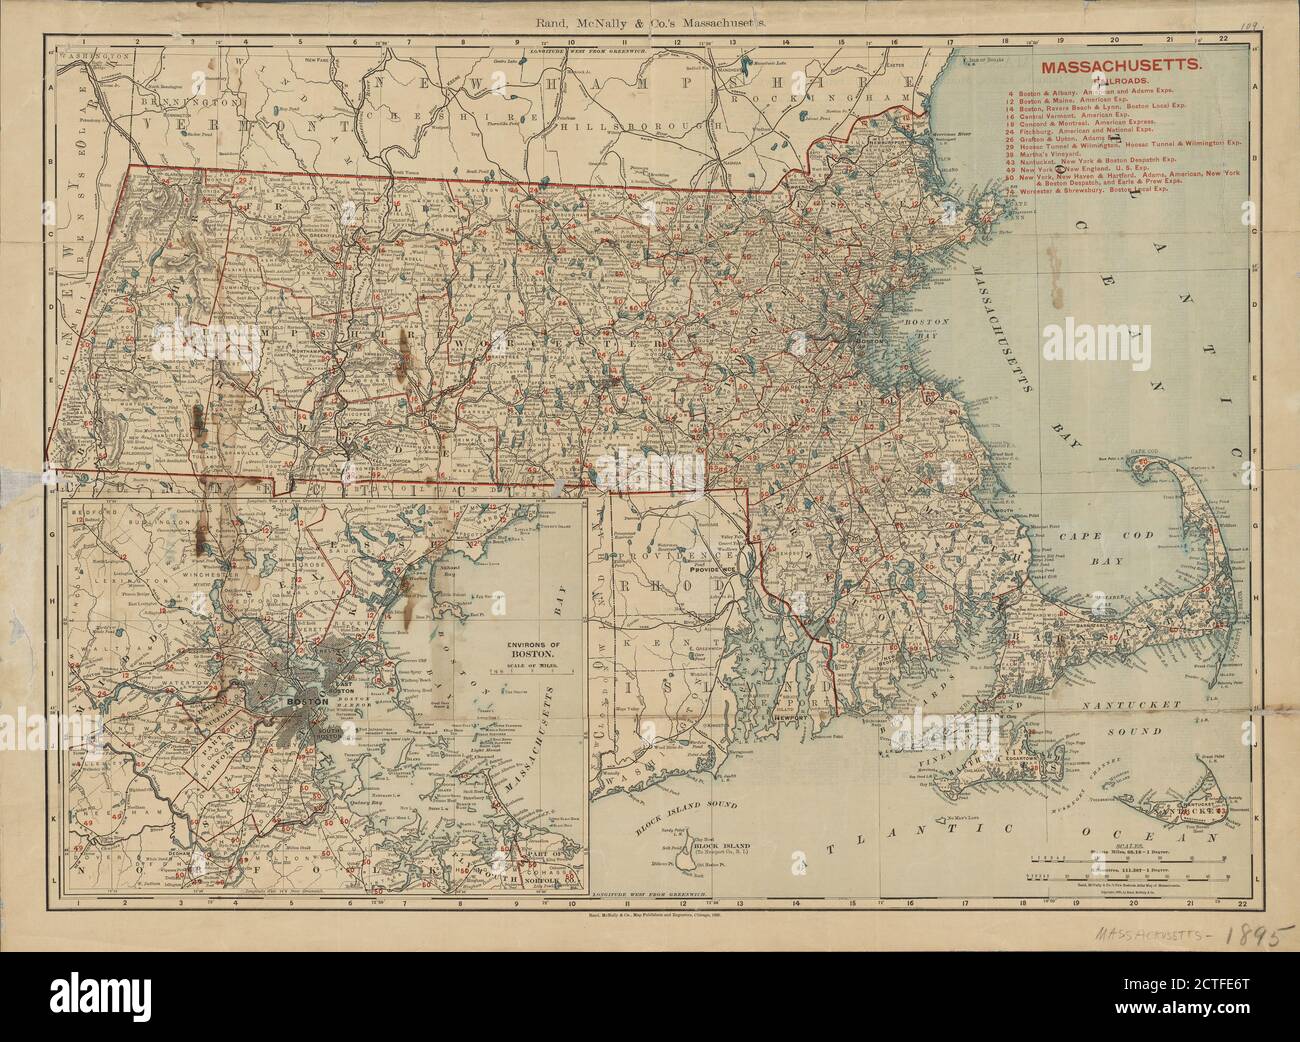 Rand, McNally & Co.'s Massachusetts, cartographic, Maps, 1895 Stock Photo